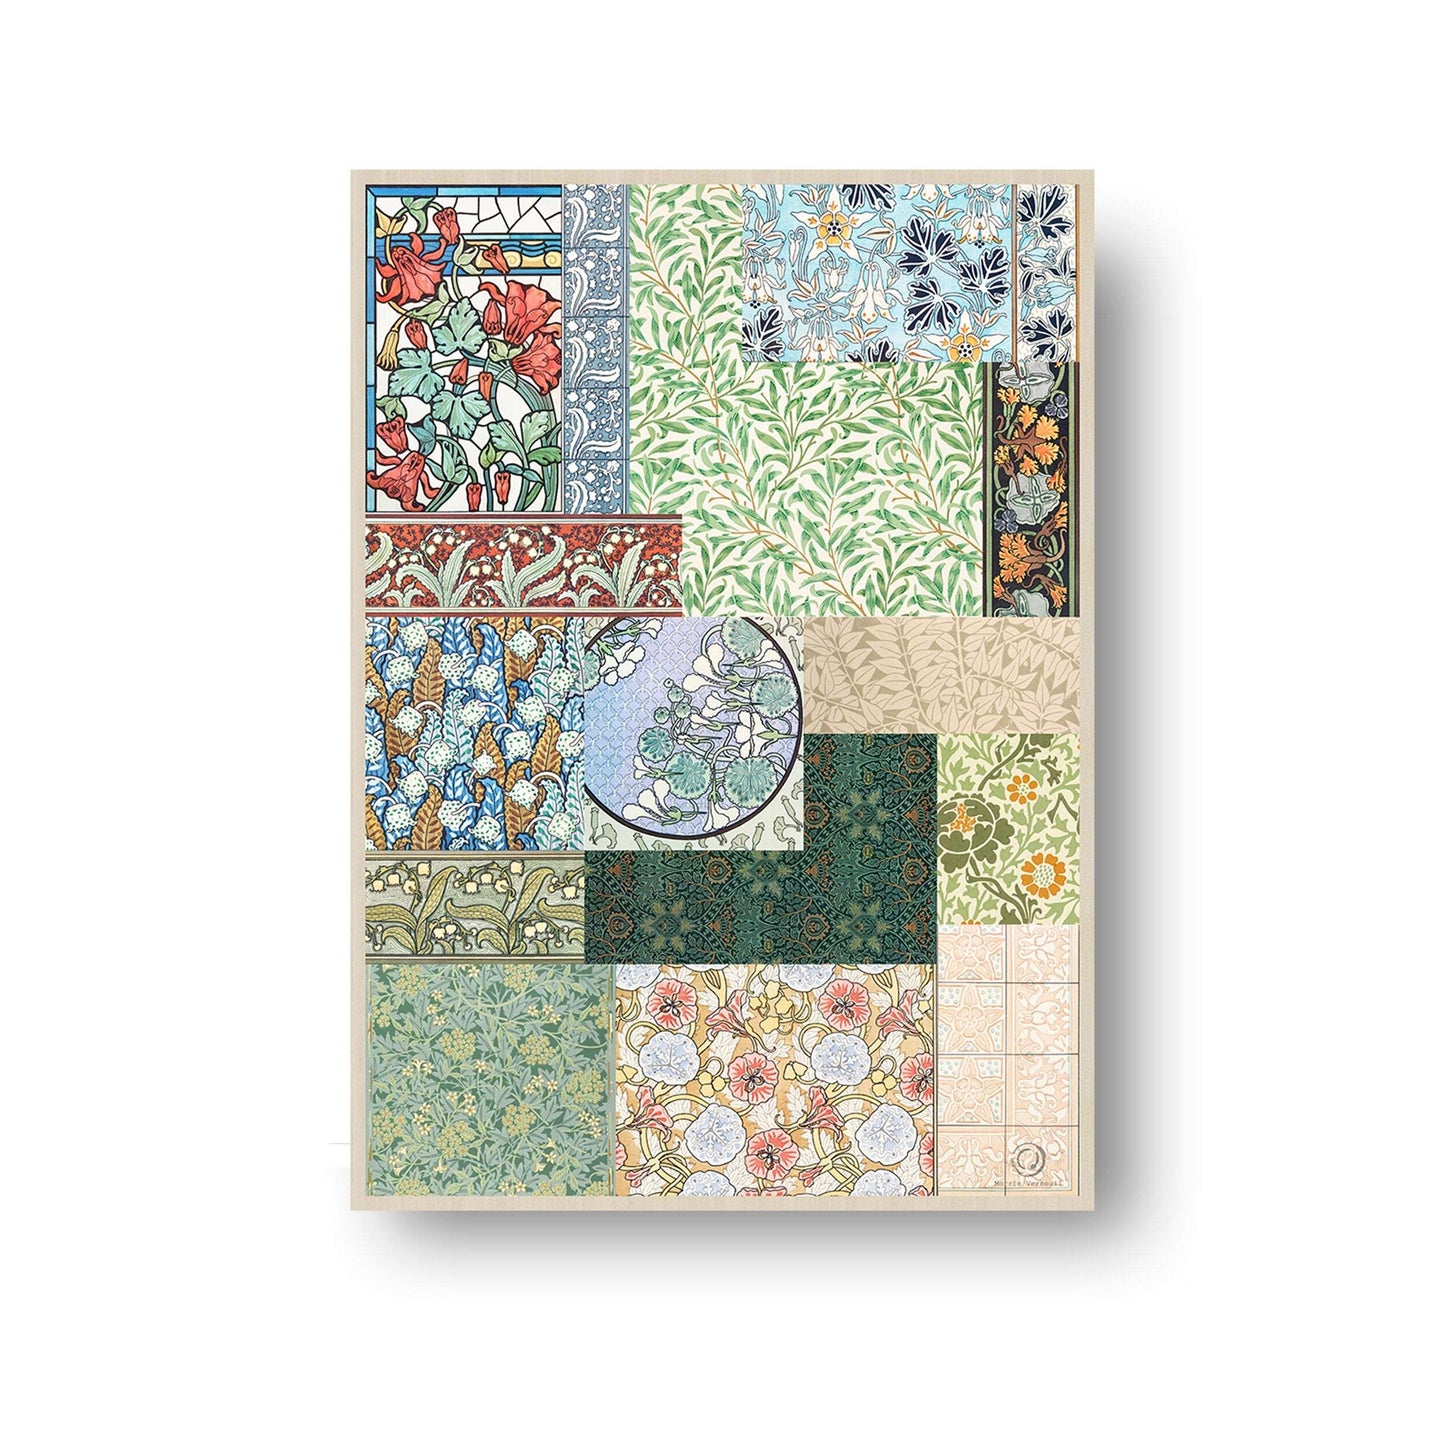 NOKUKO - Art - Pública Rework - Patterns and texture morris verneuil - print